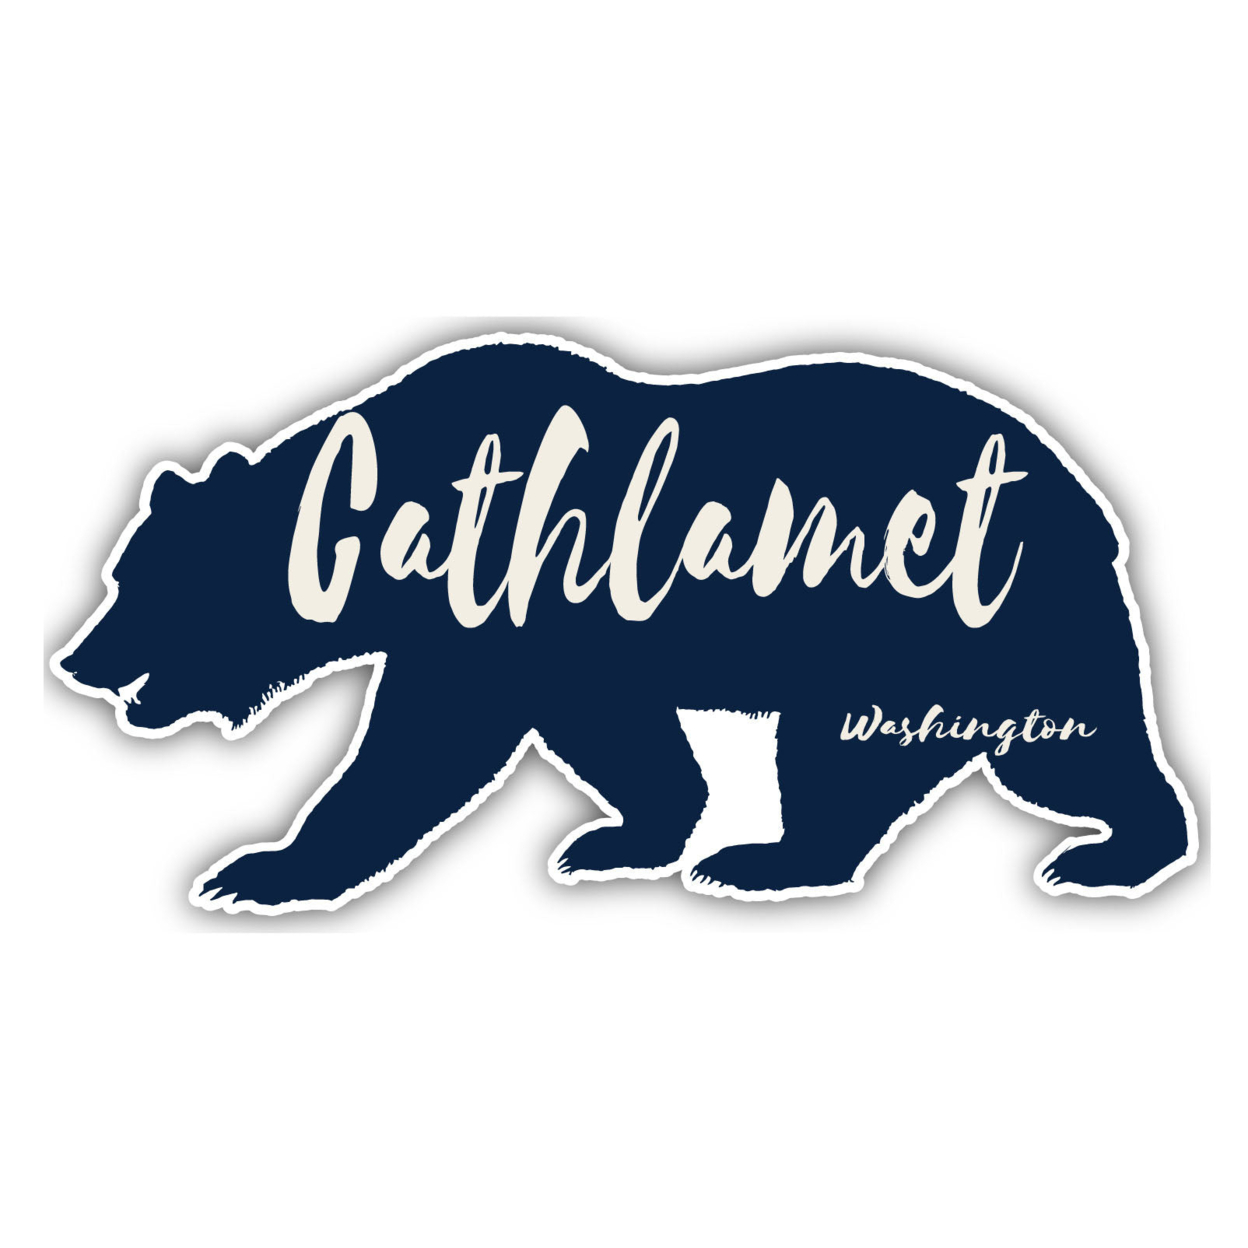 Cathlamet Washington Souvenir Decorative Stickers (Choose Theme And Size) - Single Unit, 4-Inch, Bear